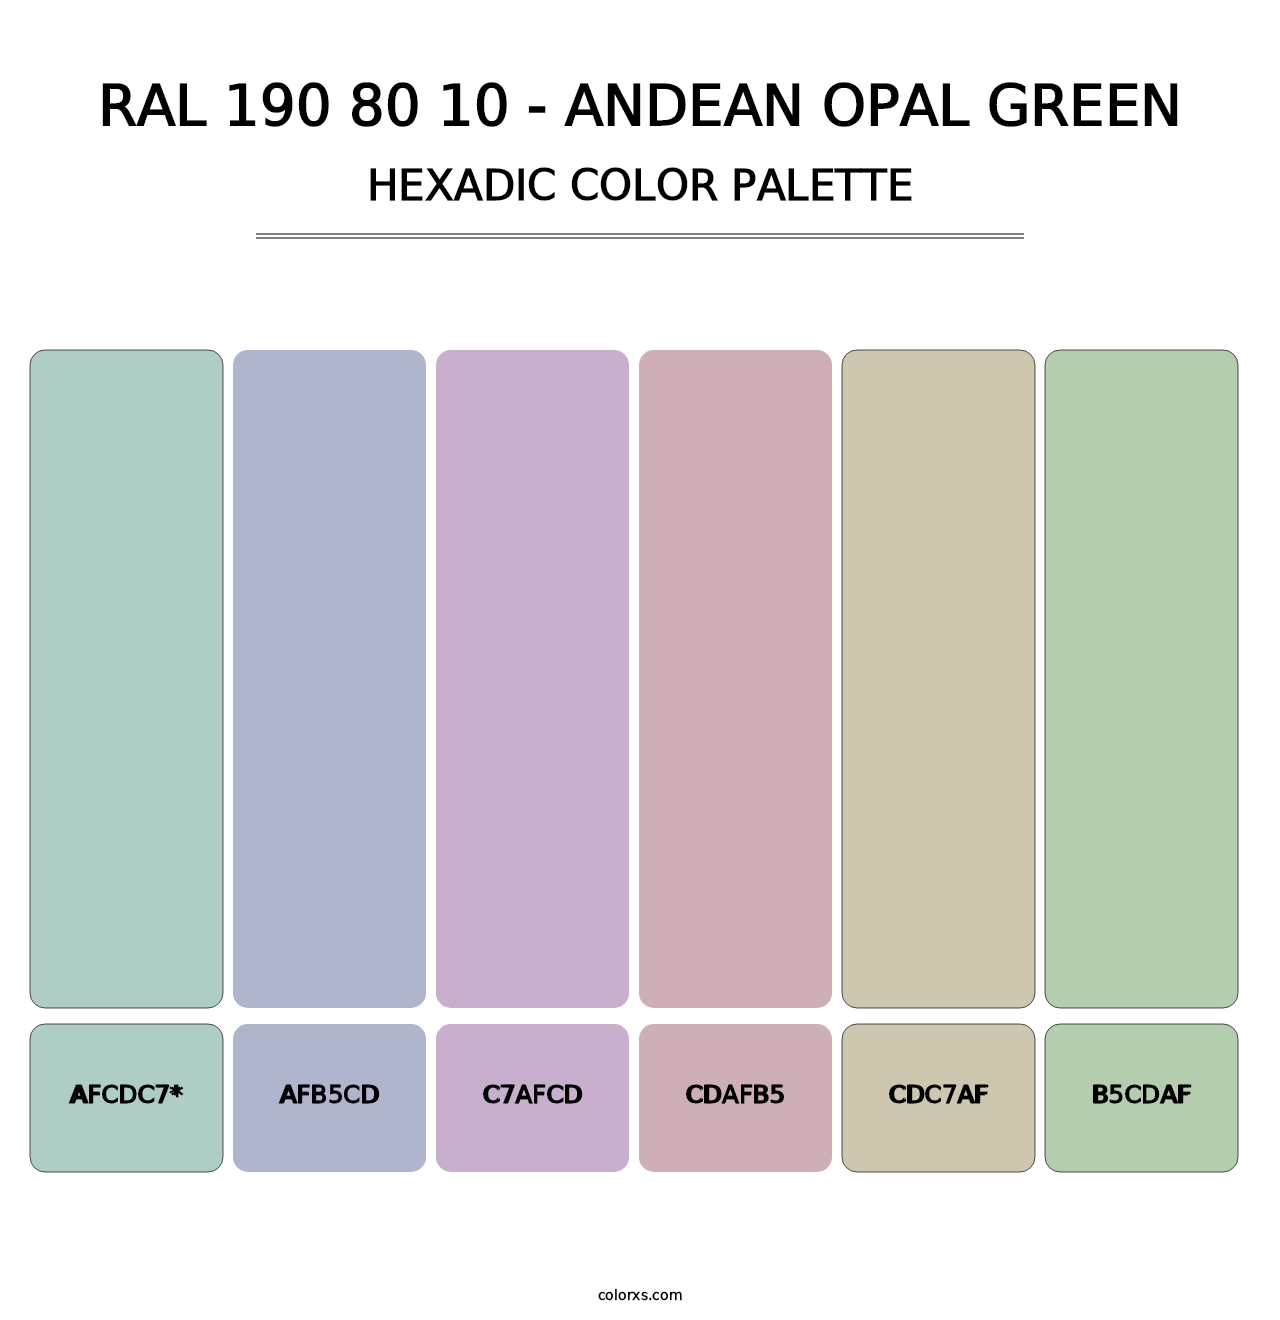 RAL 190 80 10 - Andean Opal Green - Hexadic Color Palette